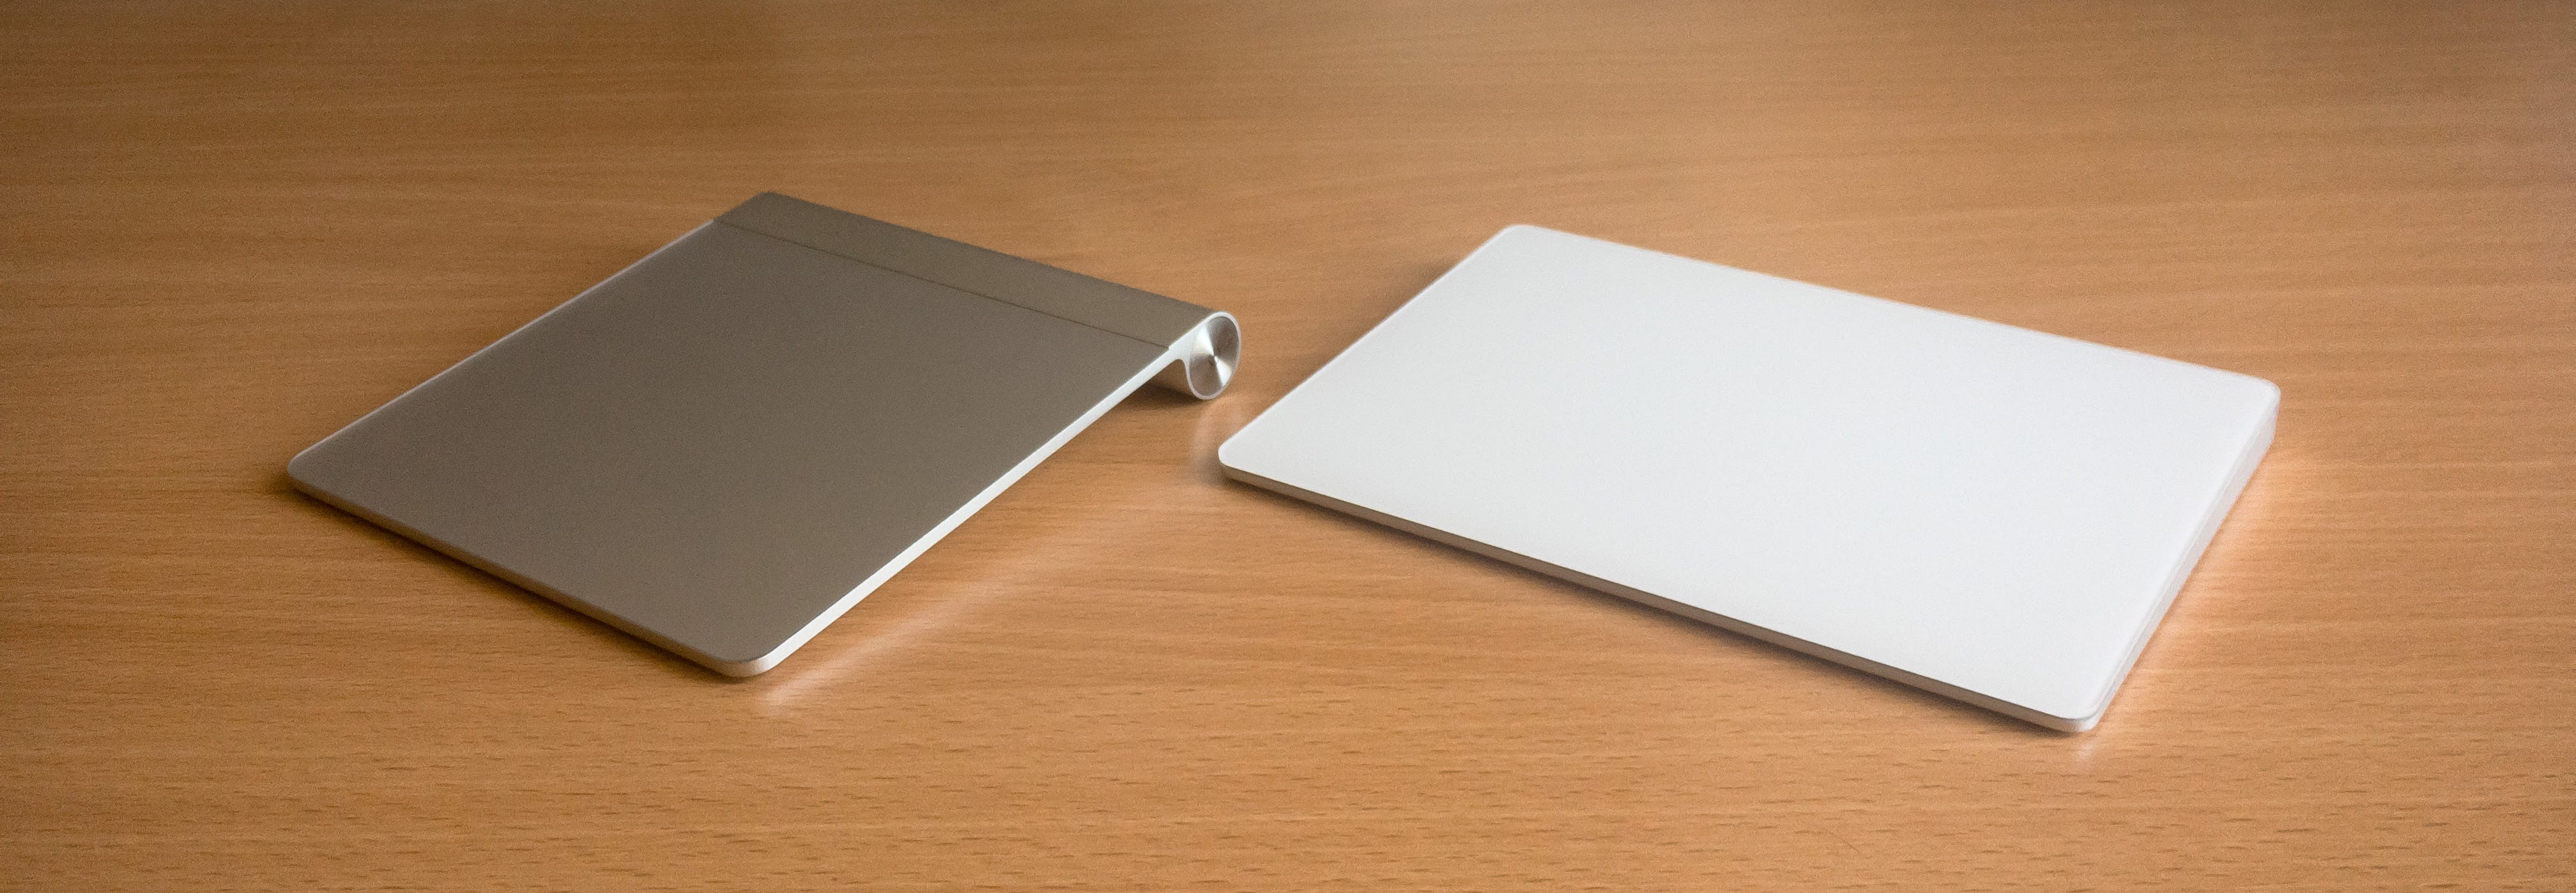 Apple Magic Trackpad 1 vs 2 (performance comparison) | by Surgie Finesse |  Mac O'Clock | Medium